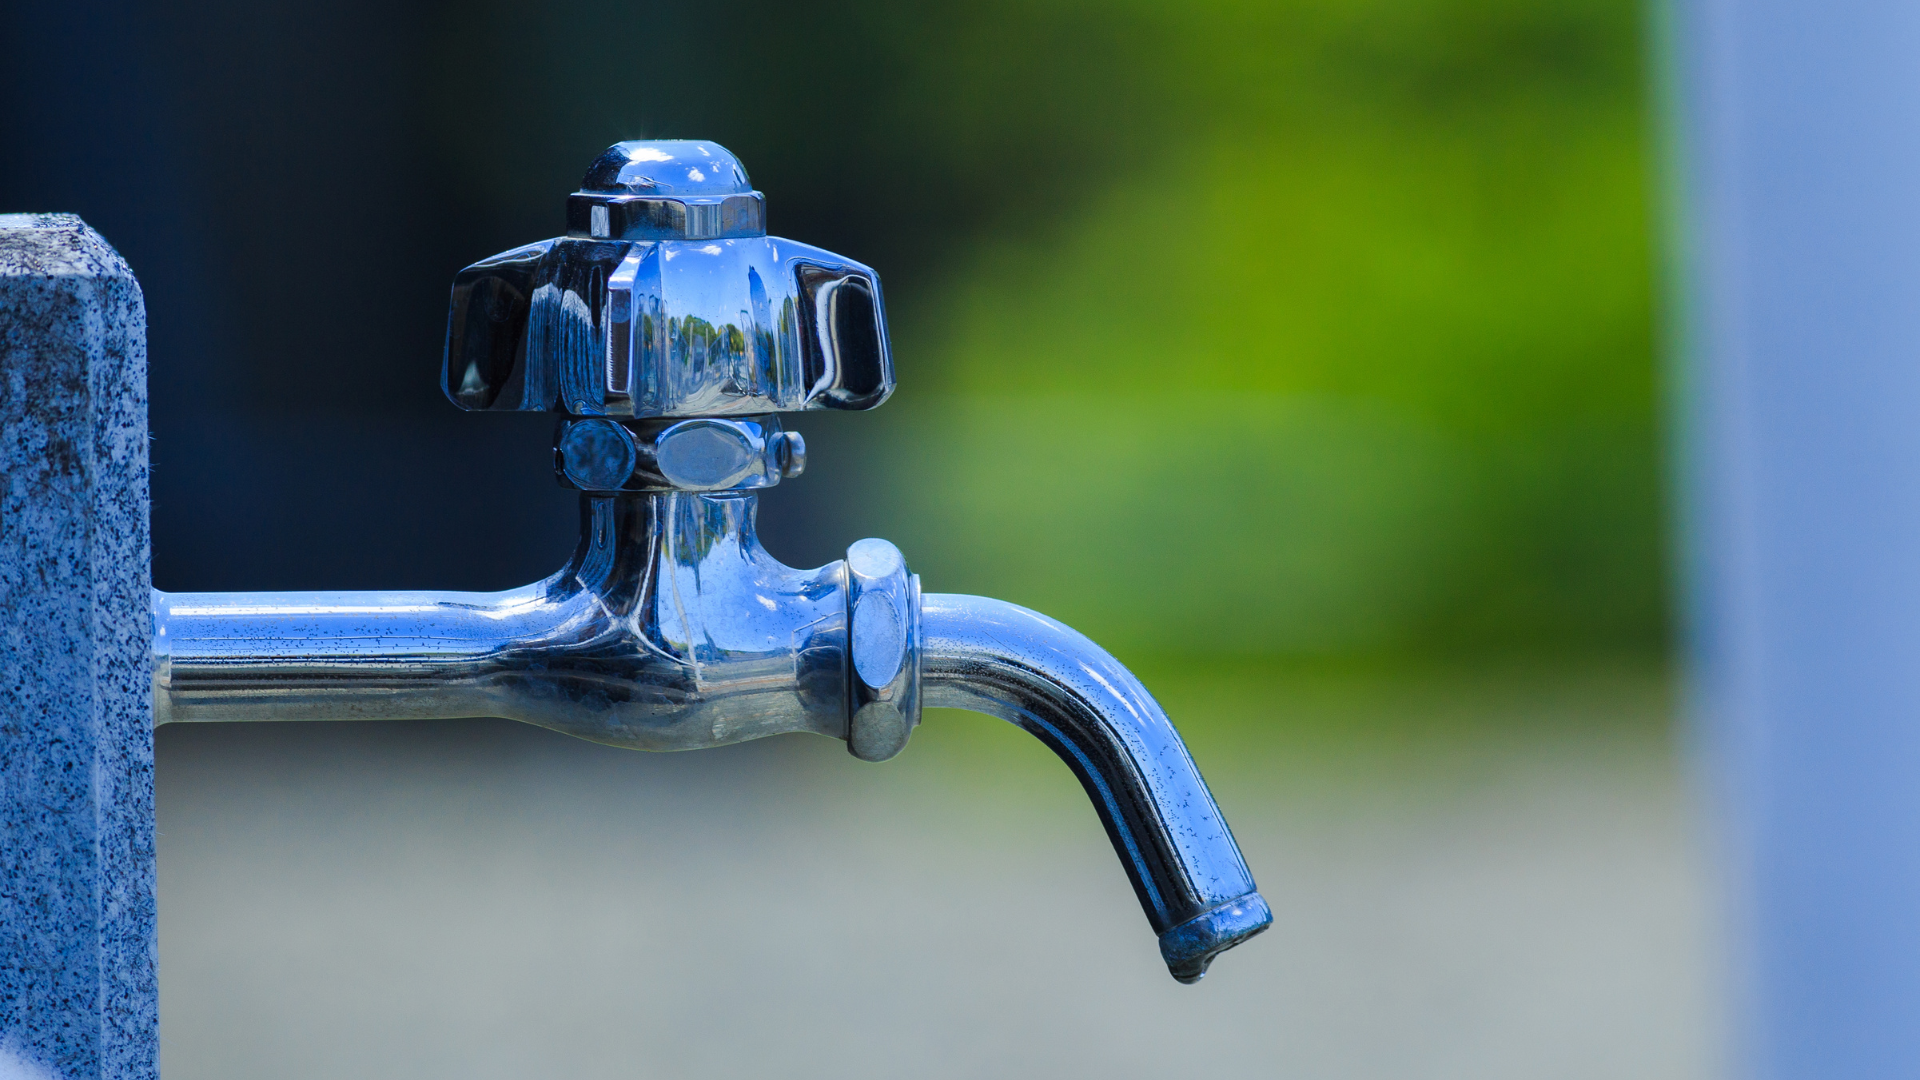 EPA announces drinking water standards regarding harmful PFAS substances